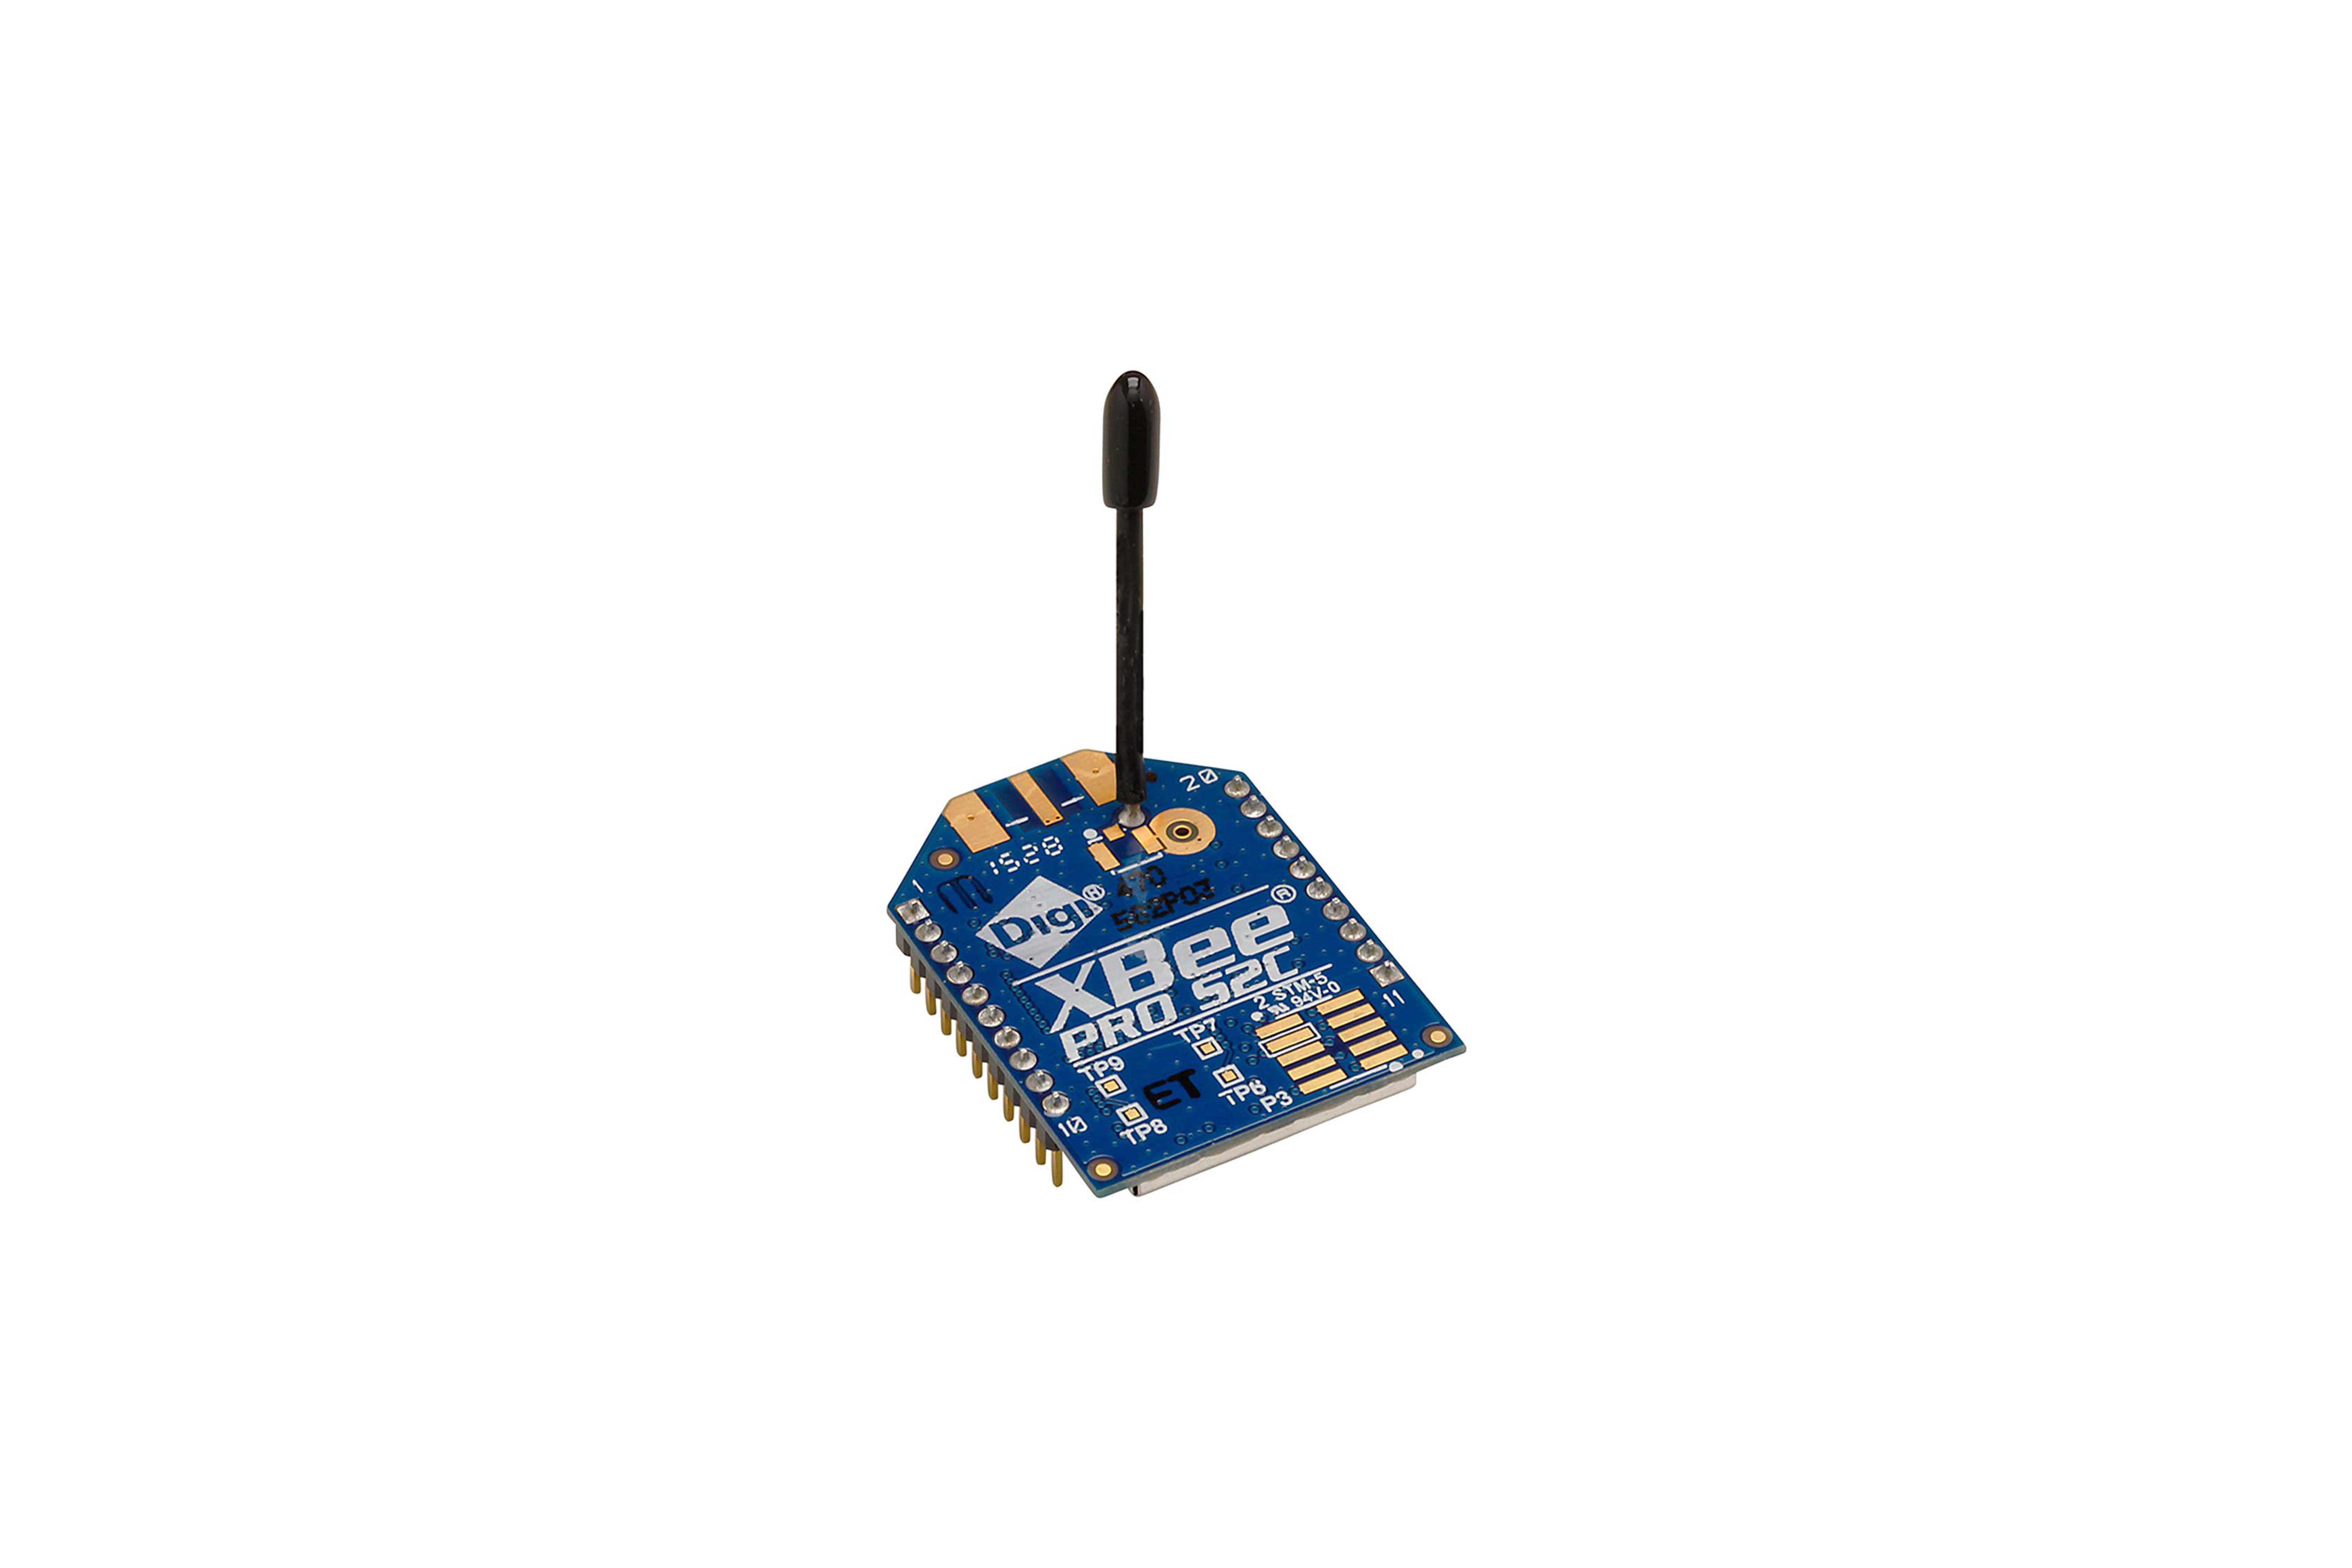 XBee-PRO S2C 802.15.4, 2,4 GHz, TH